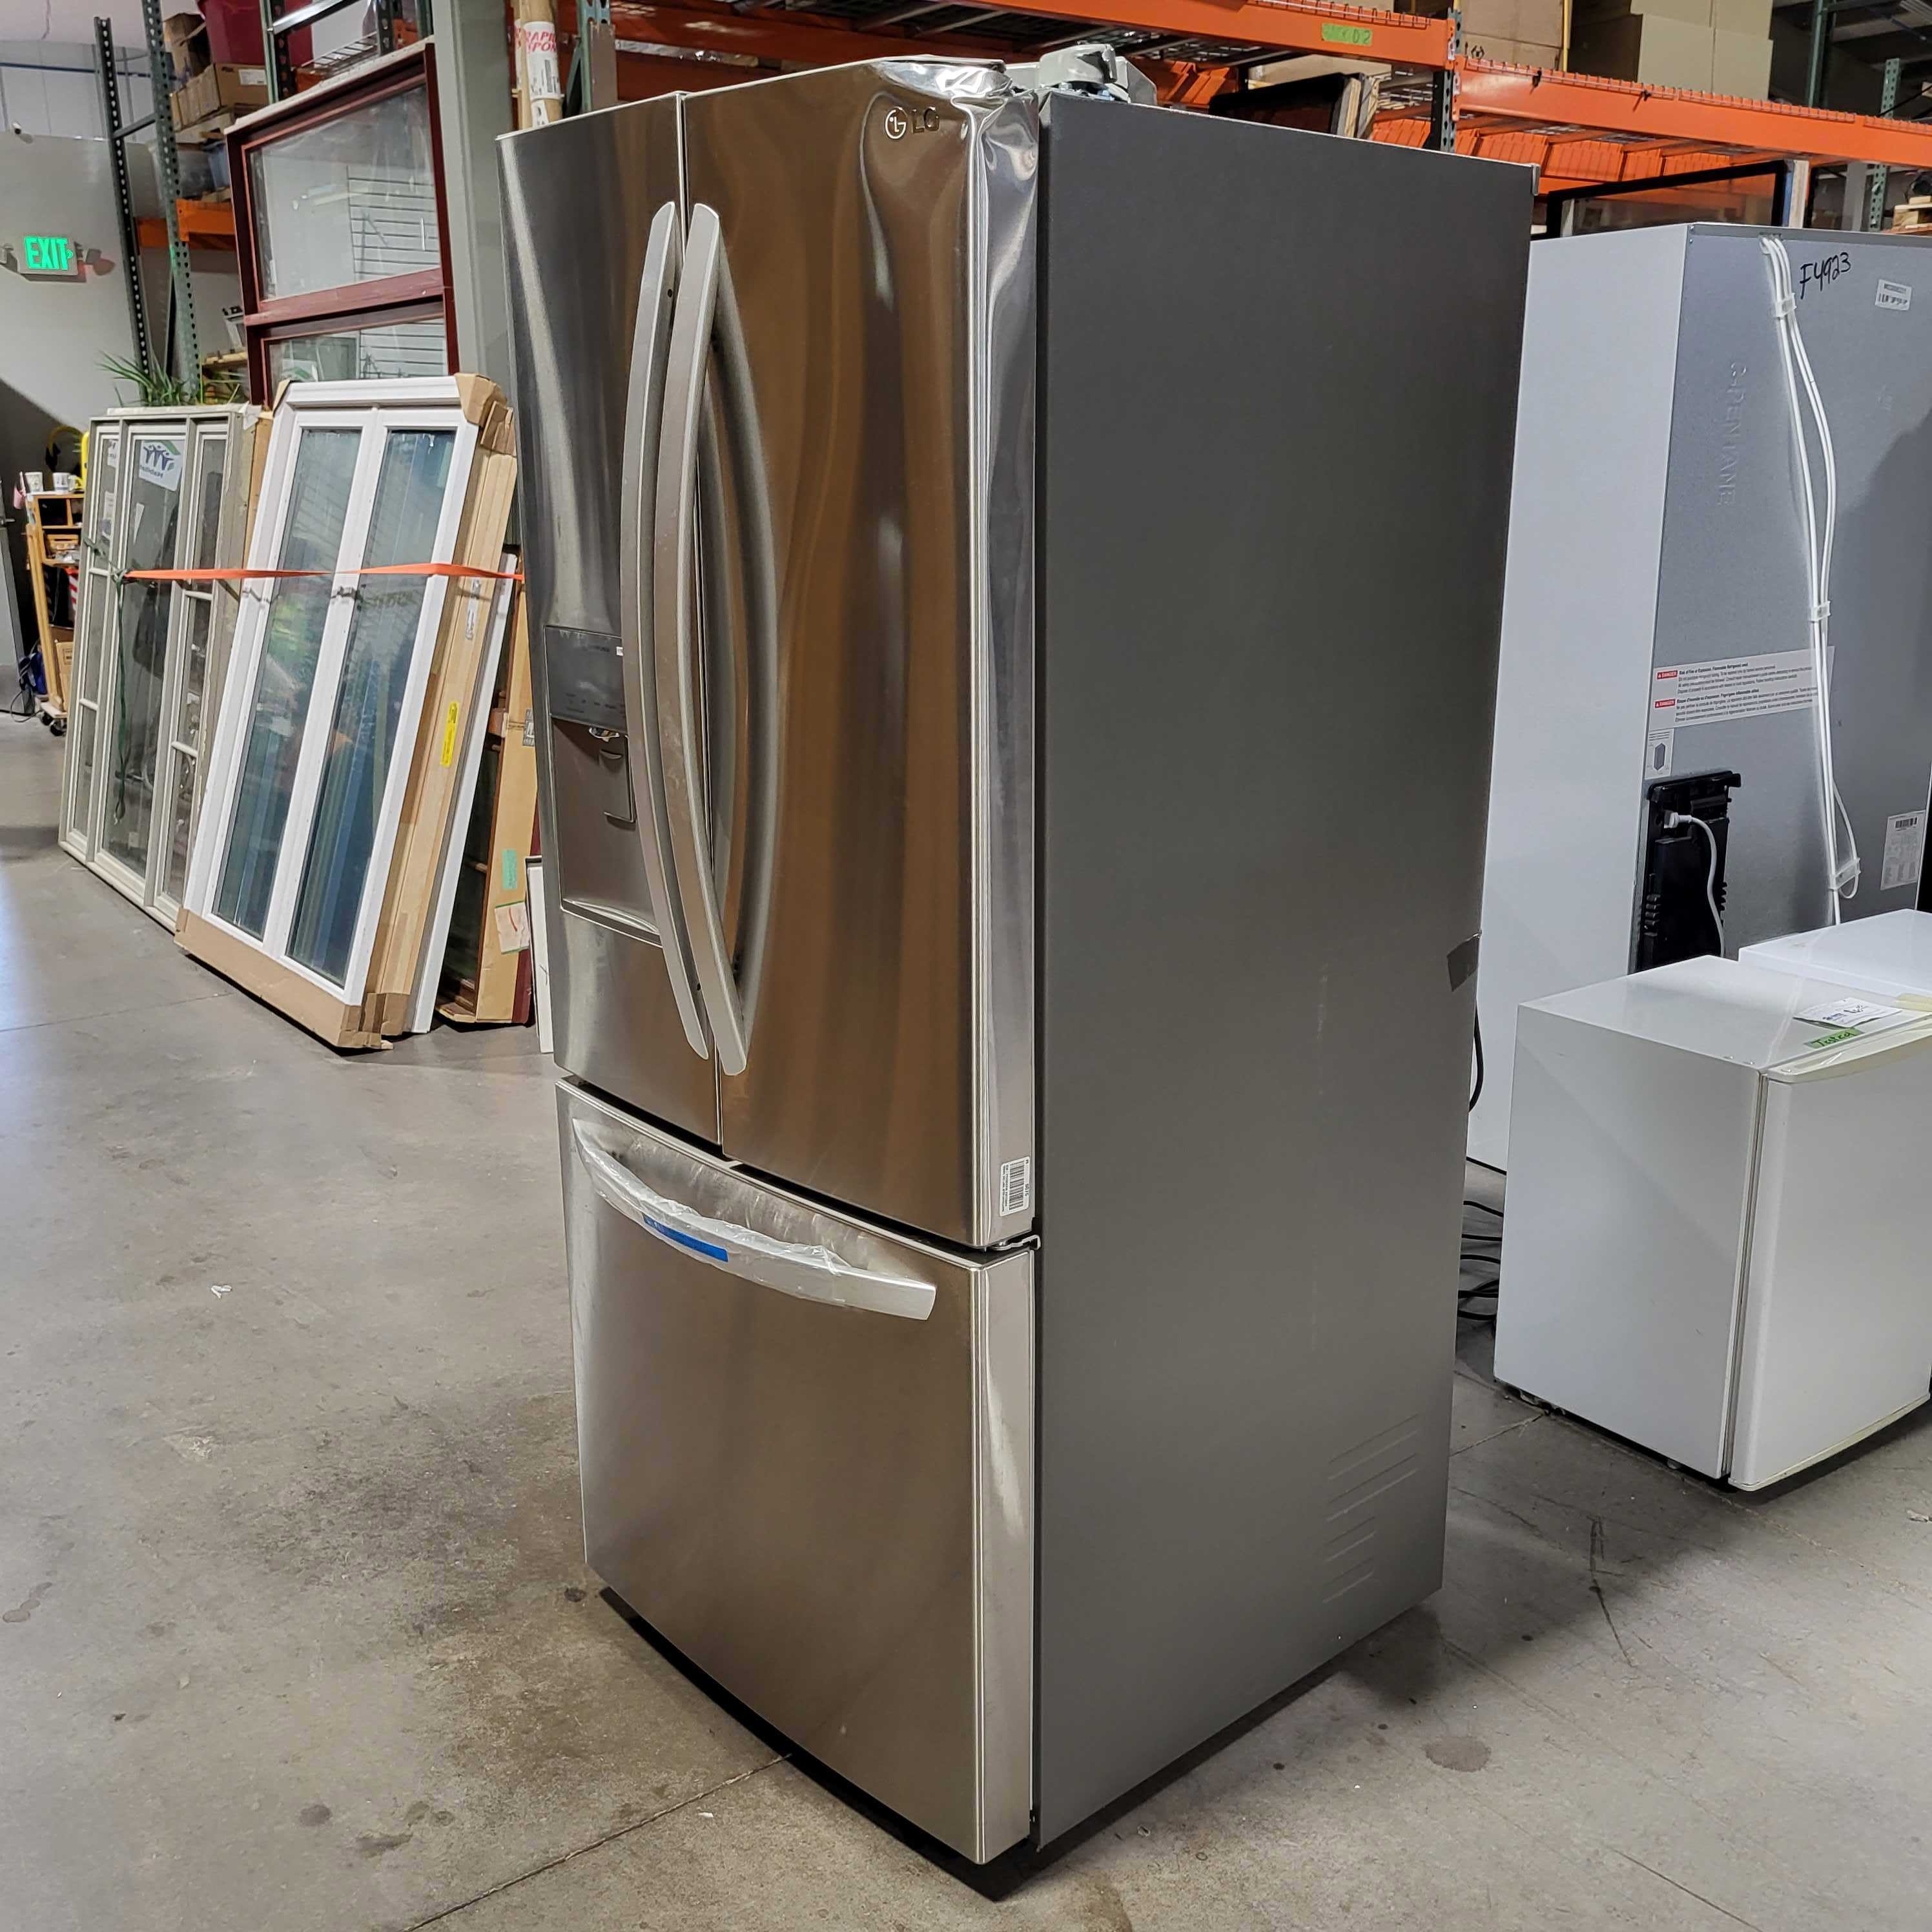 F4723 LG Stainless Steel French Doors Bottom Freezer Refrigerator